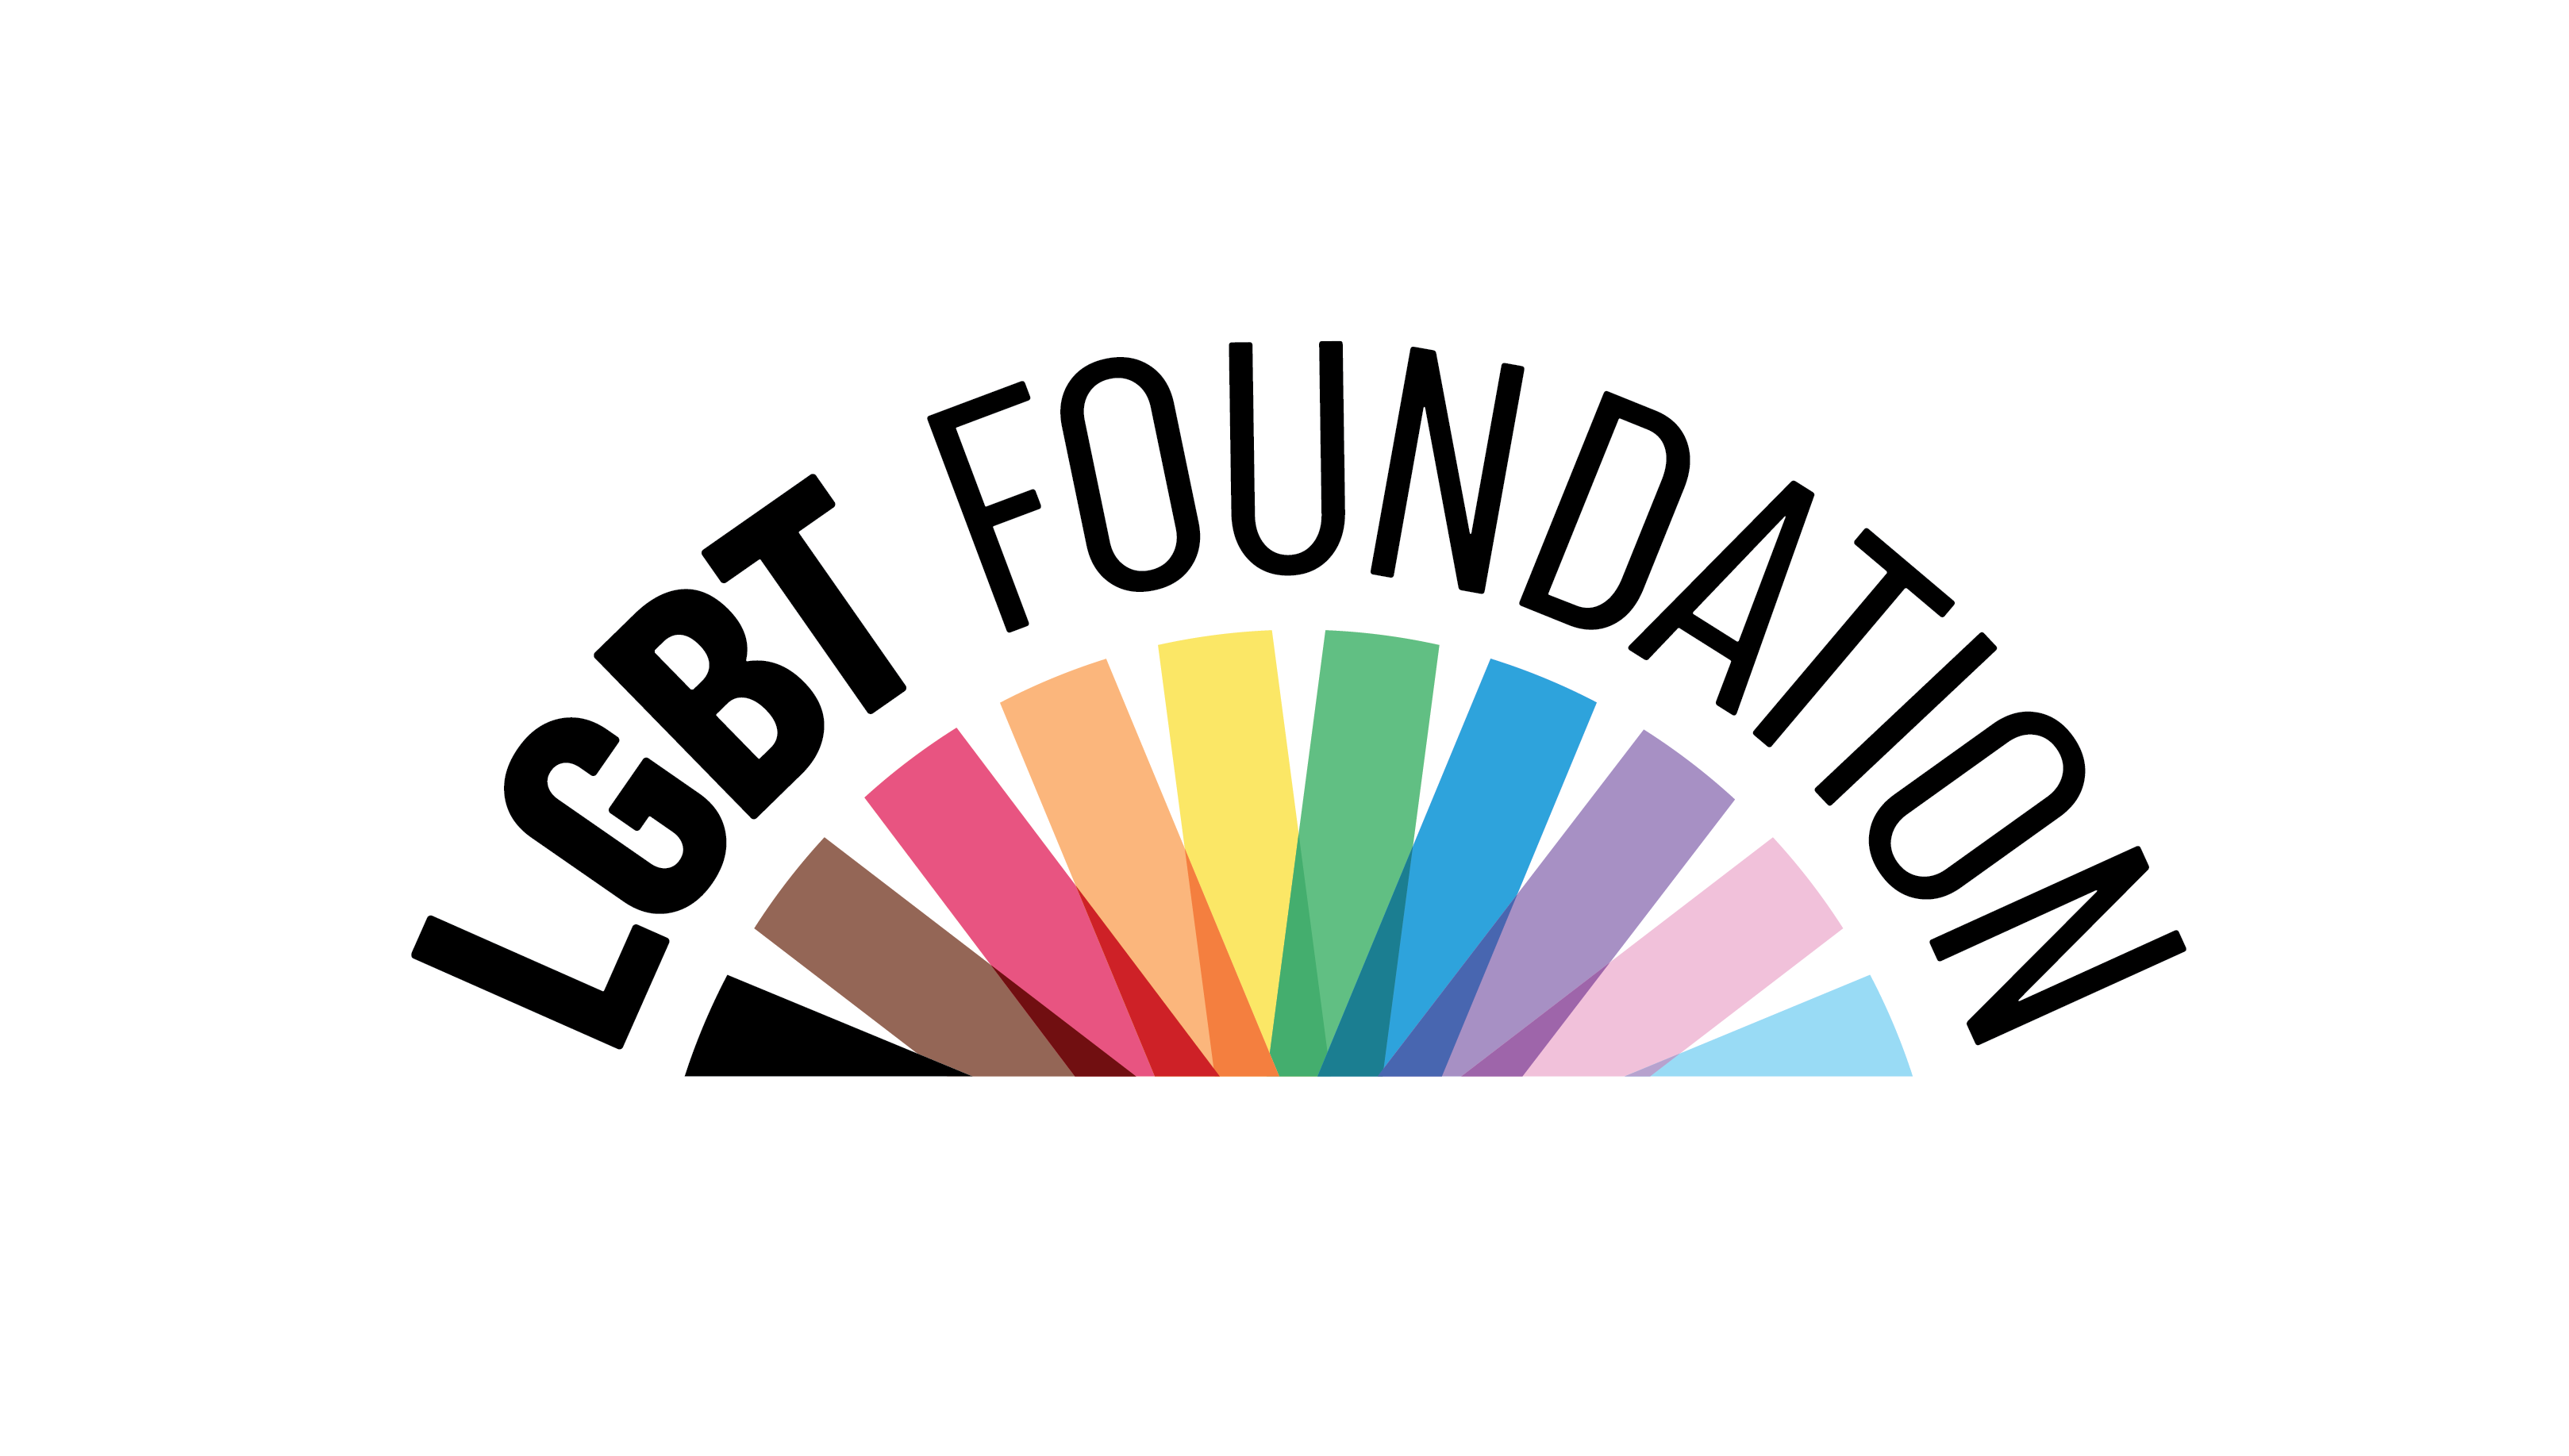 LGBT Foundation